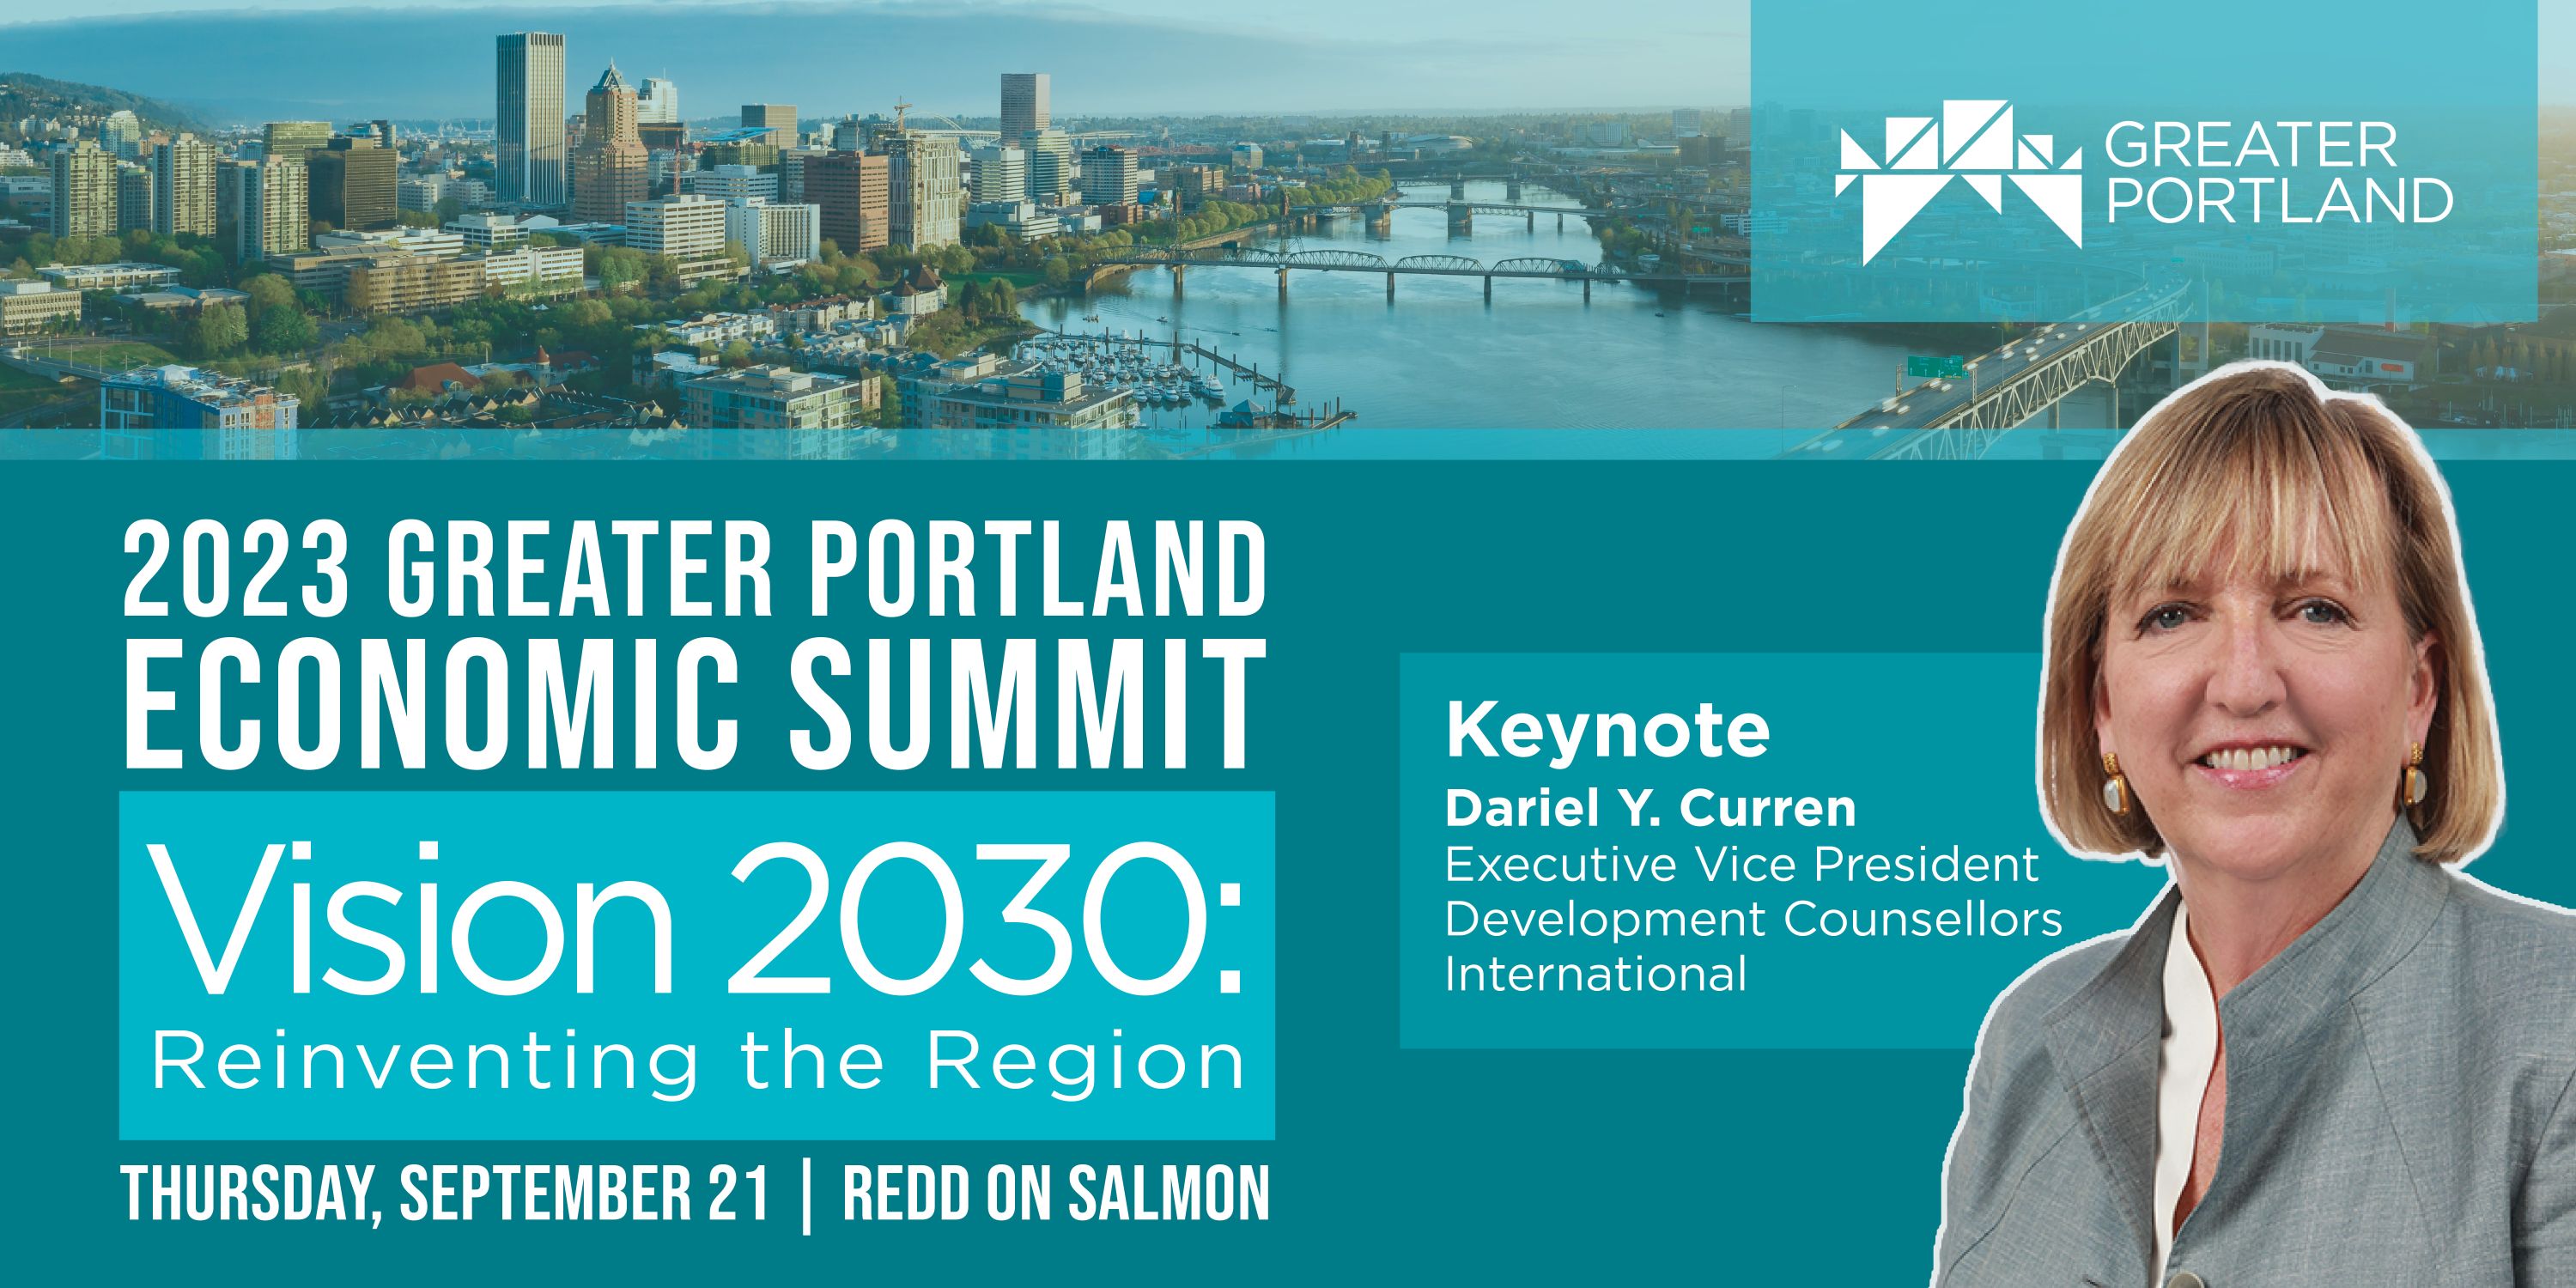 Event Promo Photo For 2023 Economic Summit: Vision 2030, Reinventing the Region